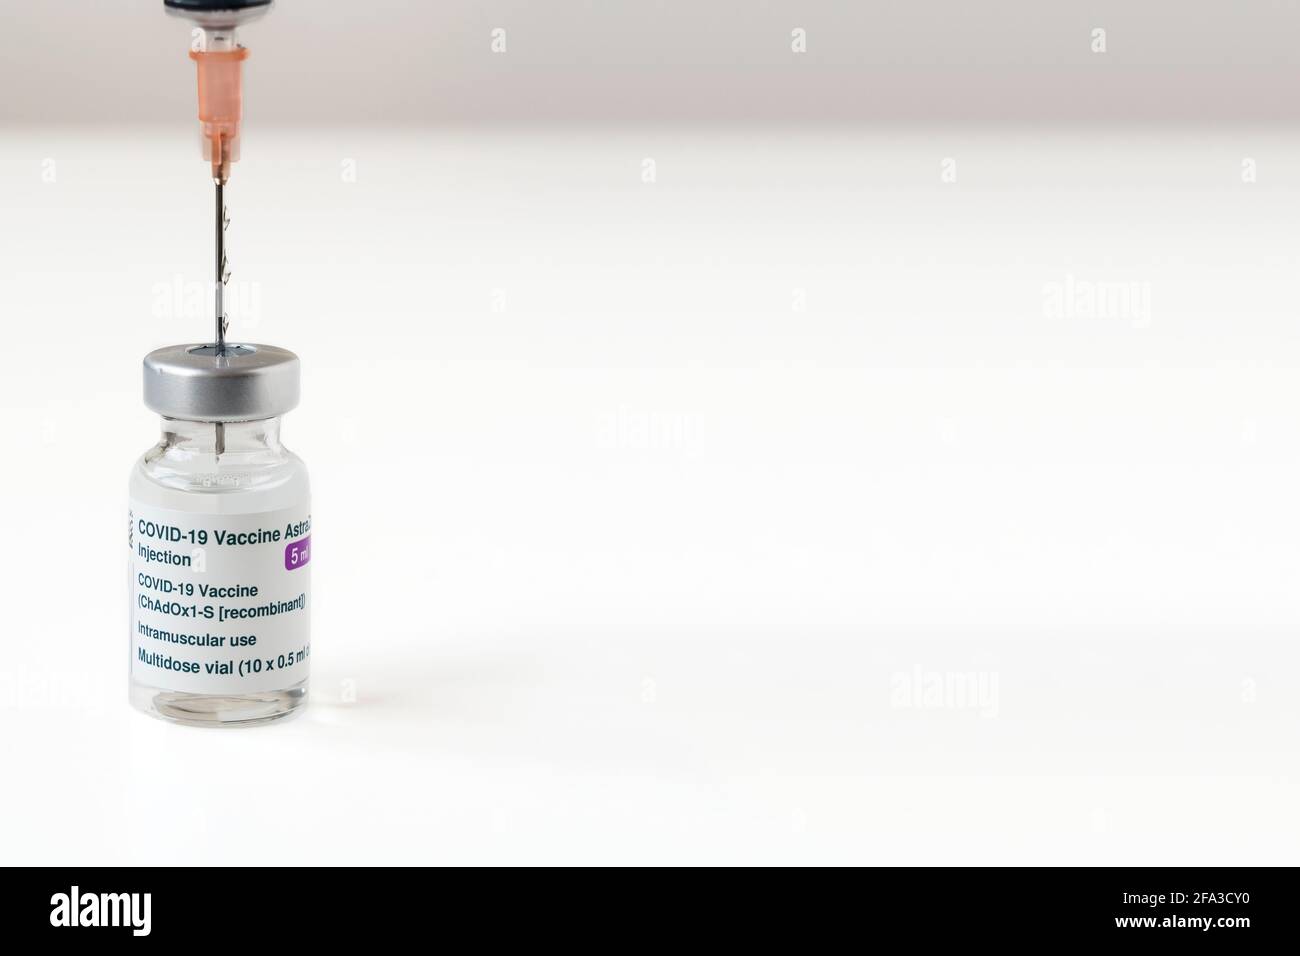 London, UK - 08 Mar 2021: Close-up of Astra Zeneca Pharmaceuticals' coronavirus vaccine next to a syringe. Copy space Stock Photo